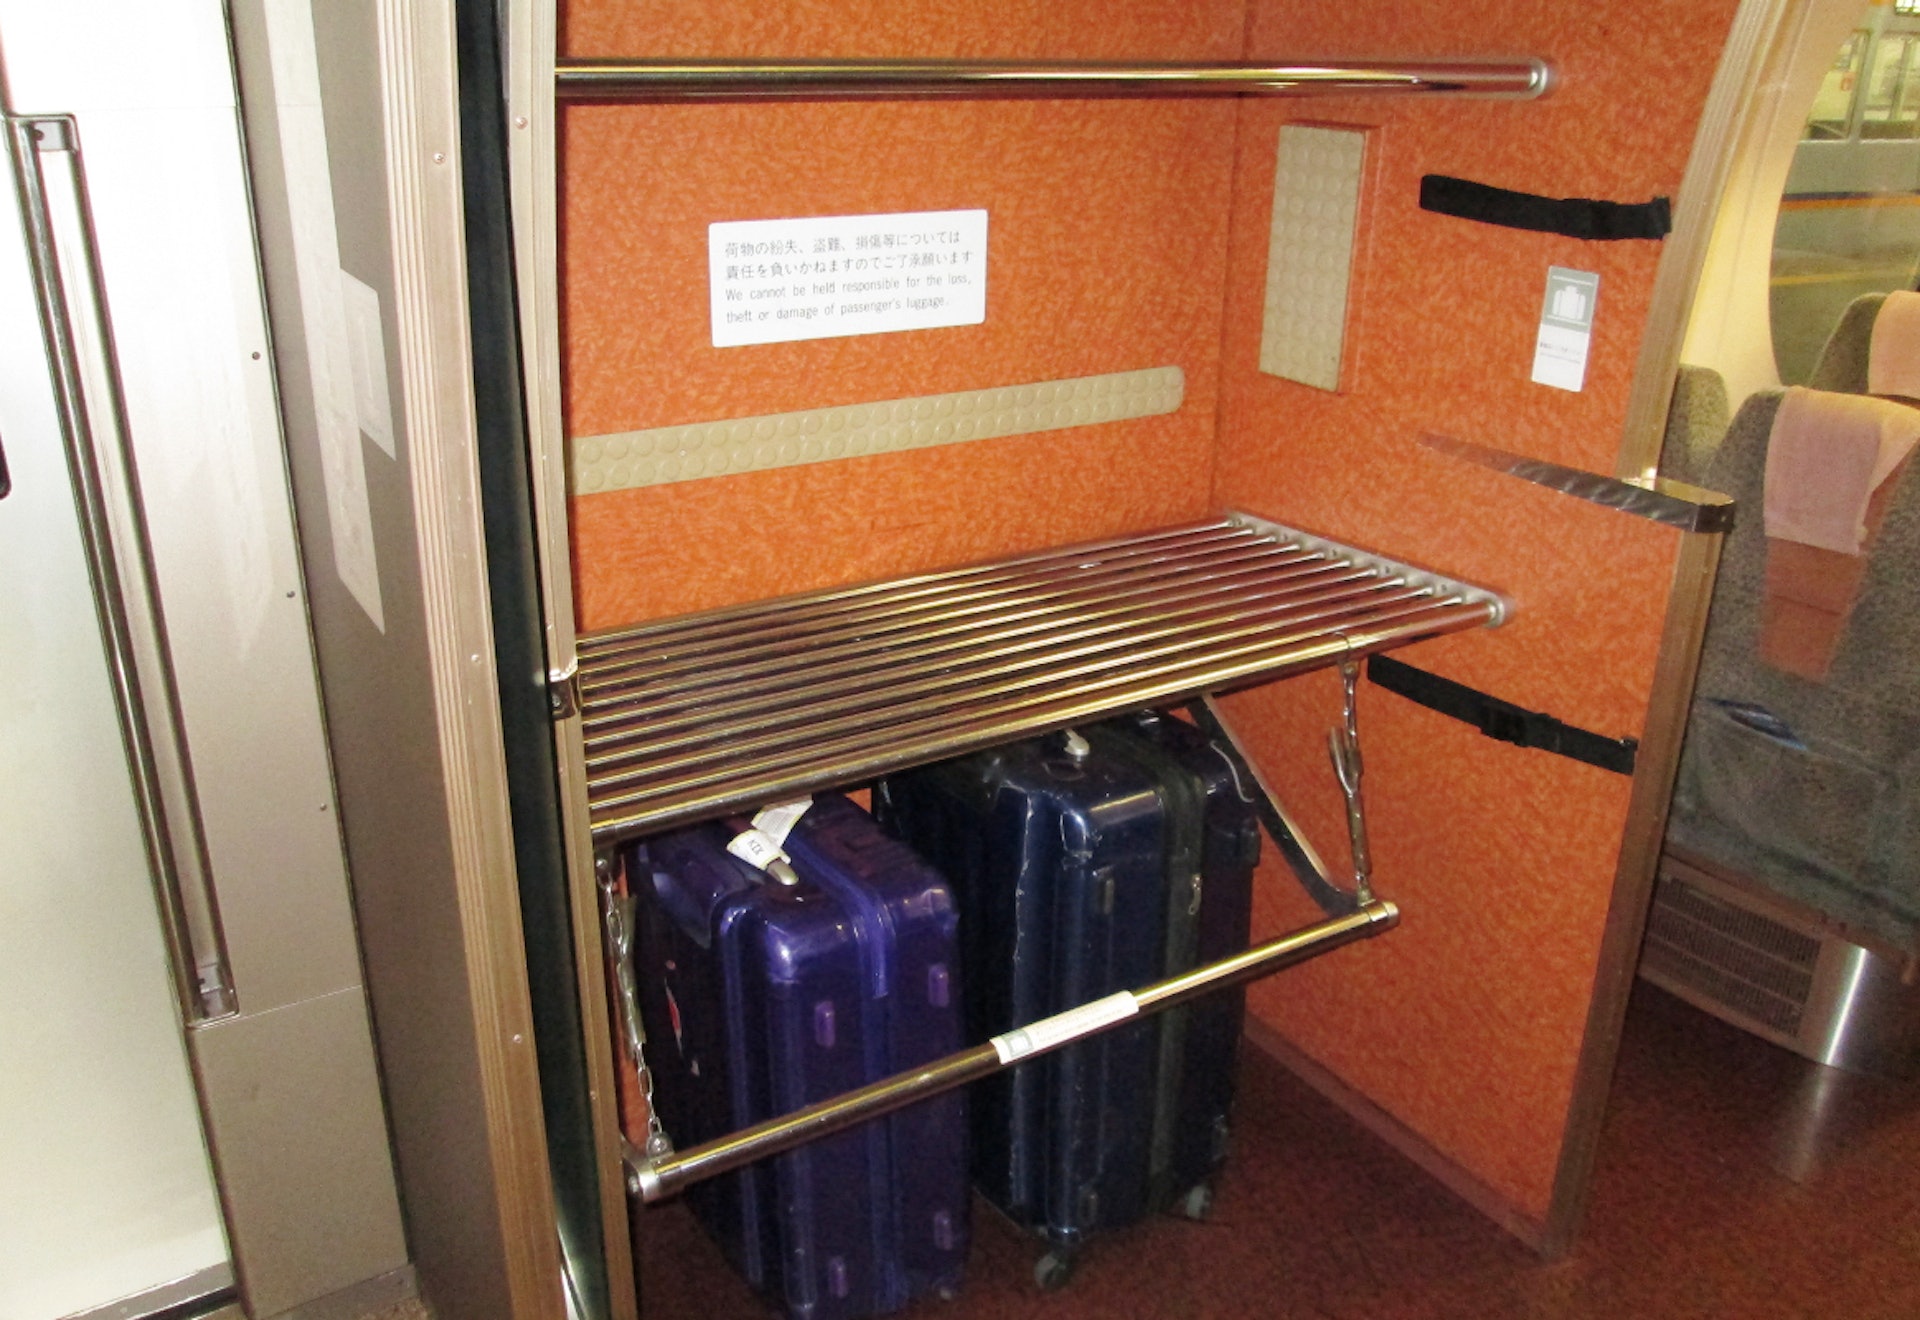 「Rapi:t」特急列車設有行李架供乘客存放大型行李（圖片來源：南海電氣鐵道株式會社）